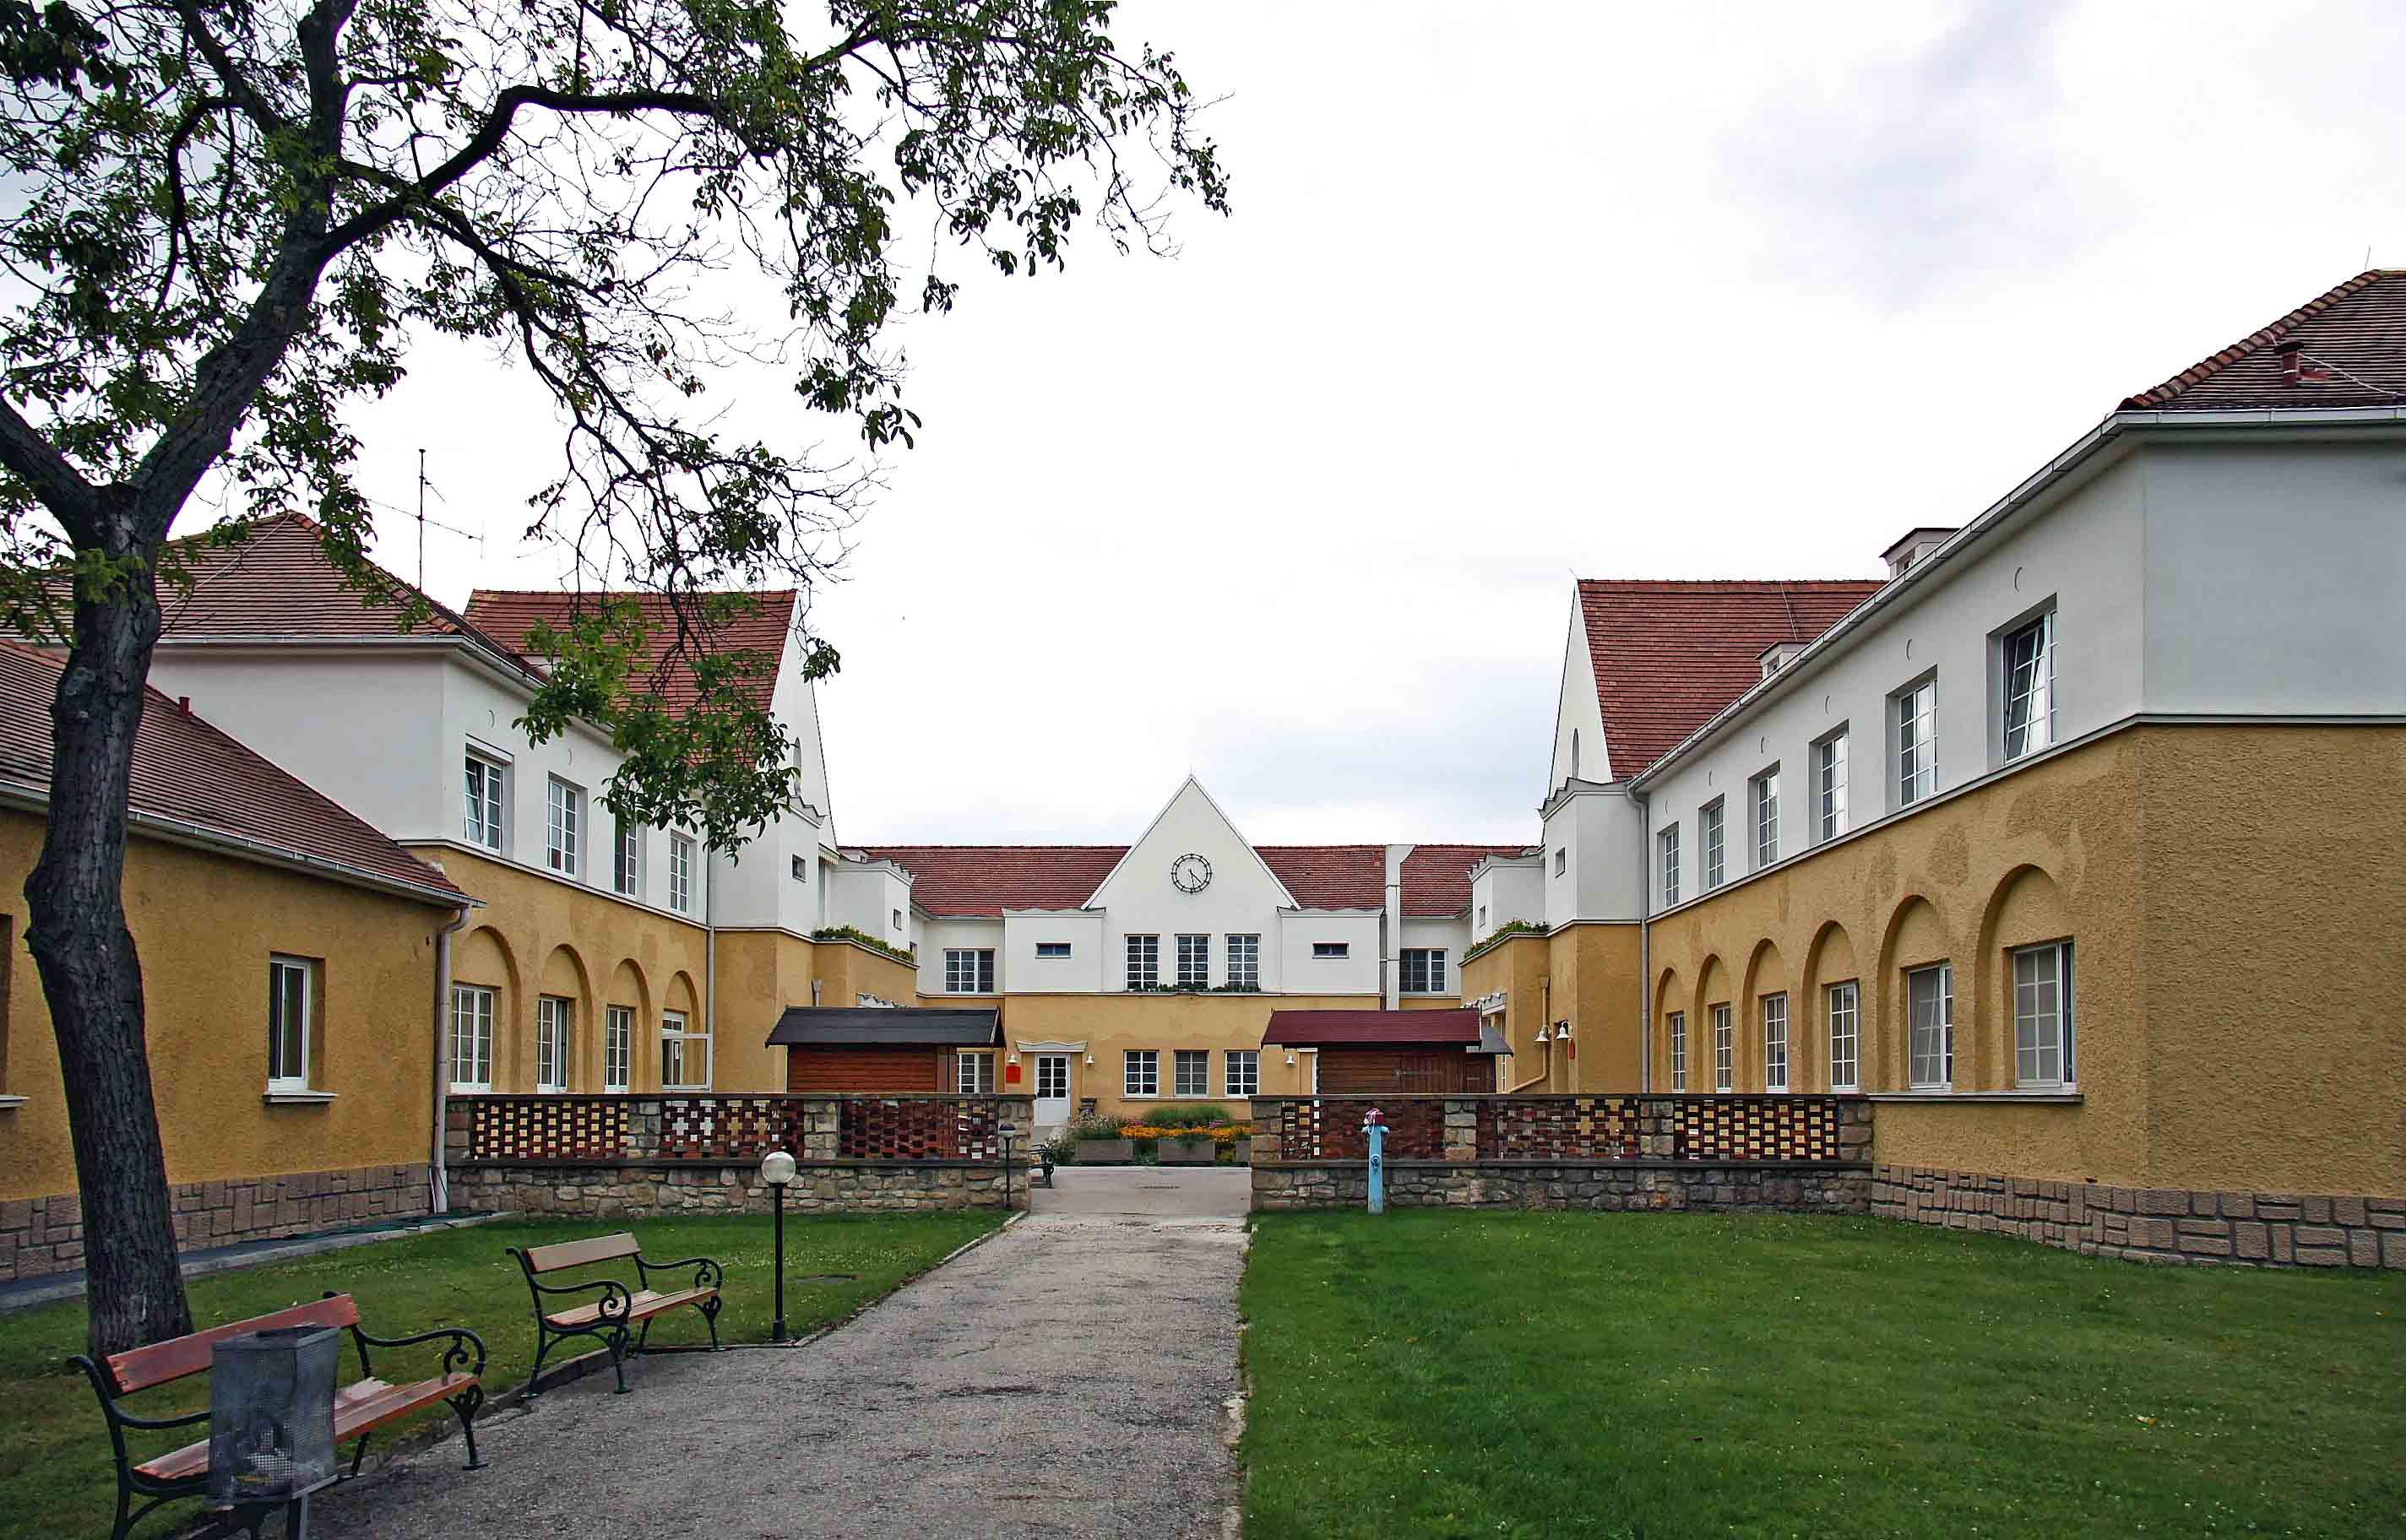 Landespflegeanstalt Neudörfl c Steindy 2012